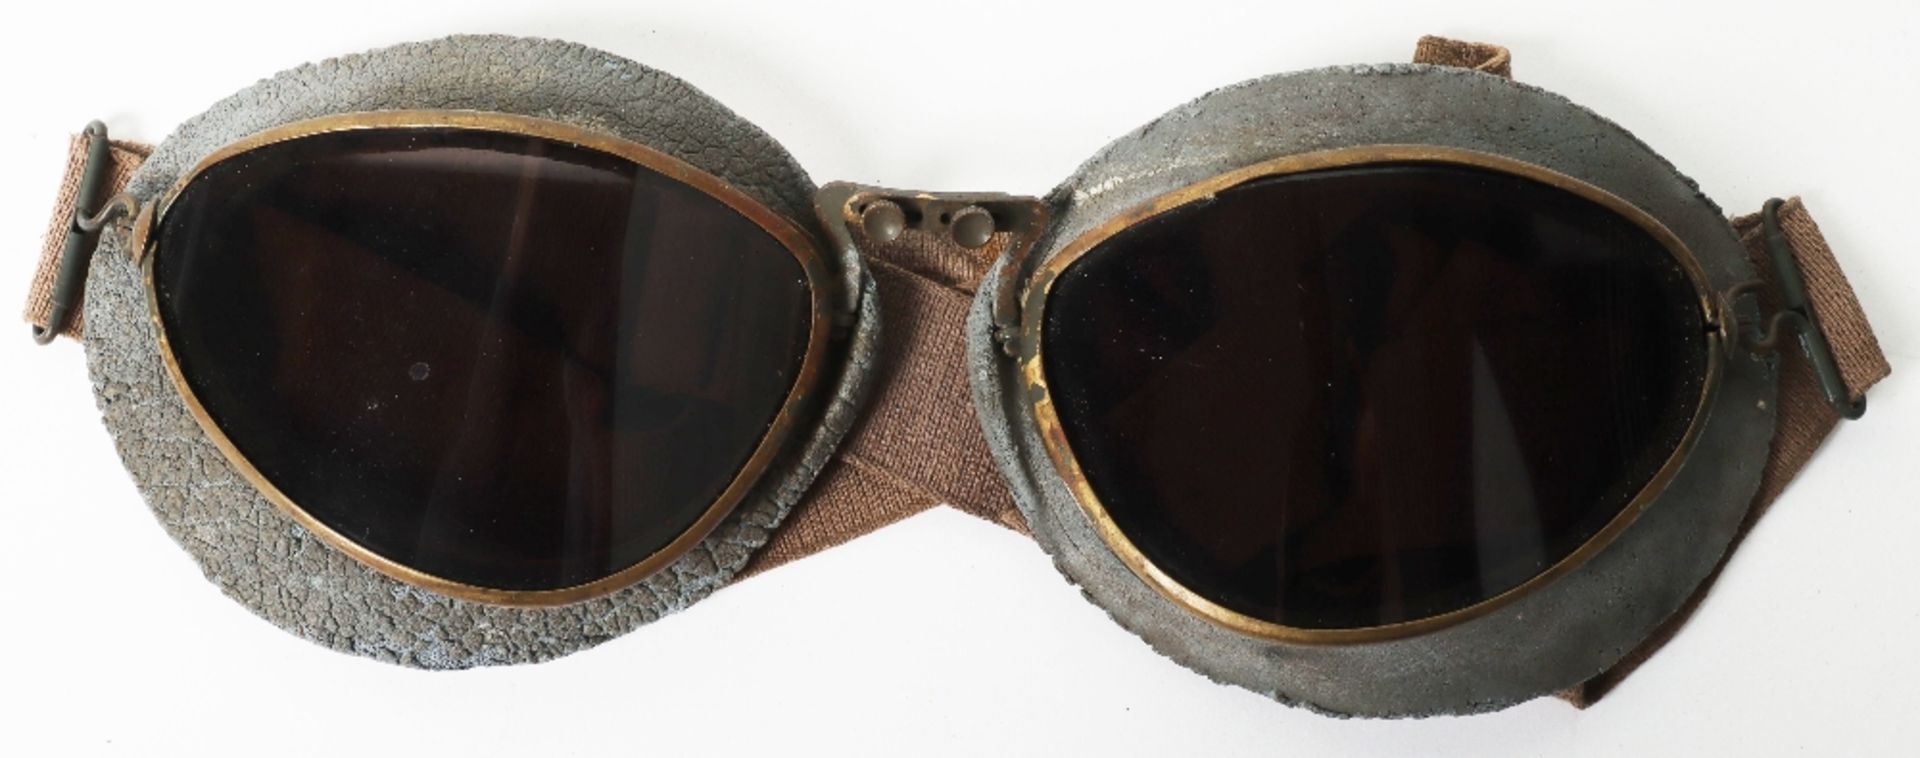 WW2 Luftwaffe Style Flying Goggles